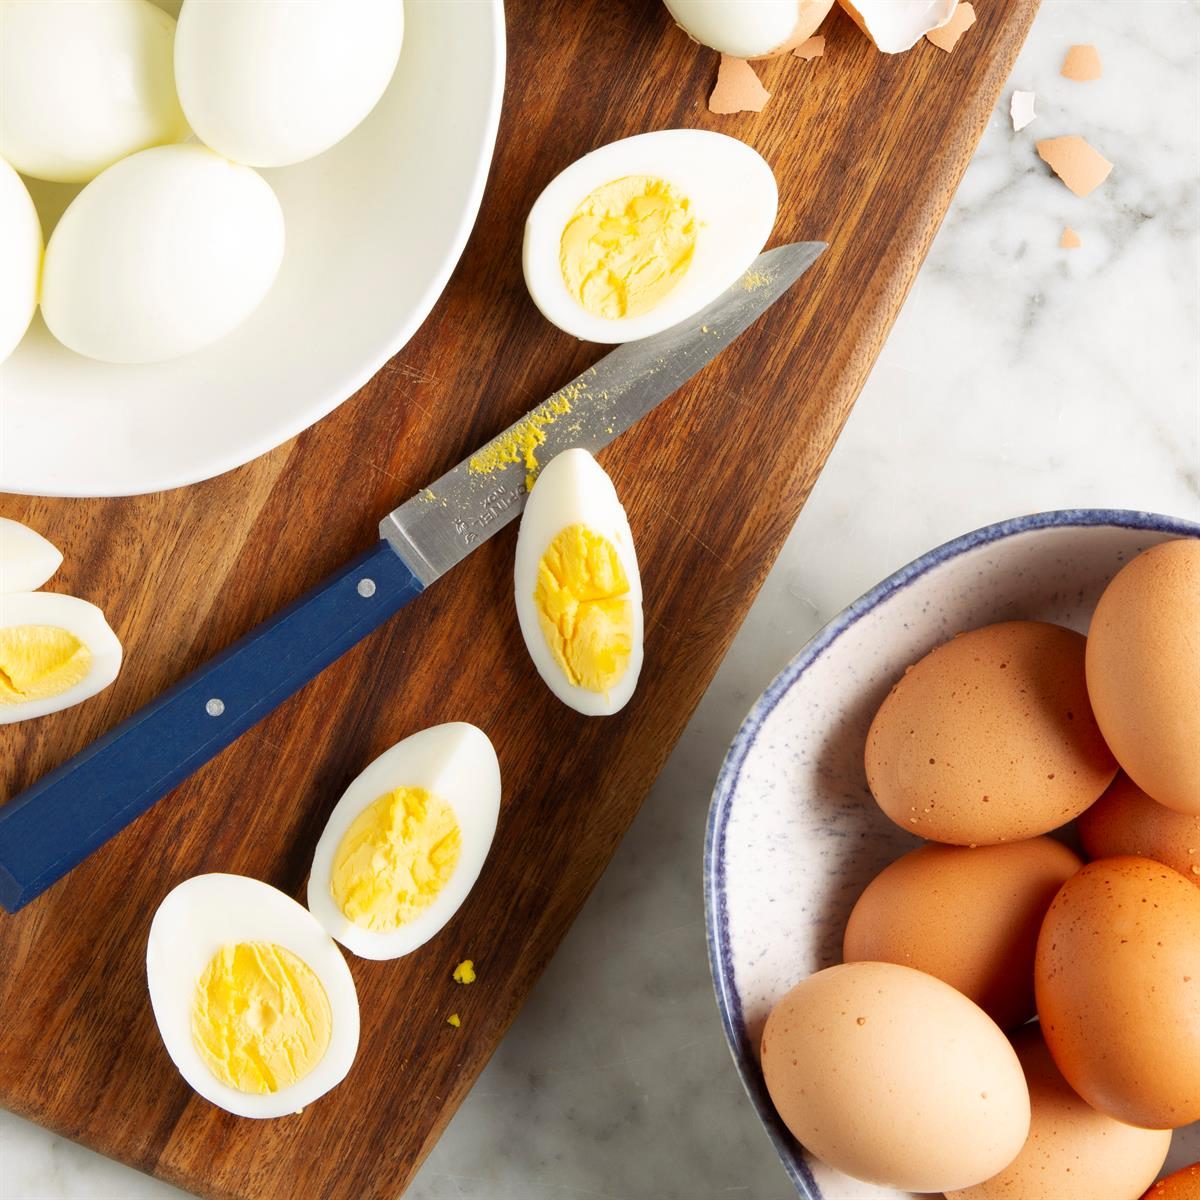 Pressure Cooker Hard-Boiled Eggs Recipe